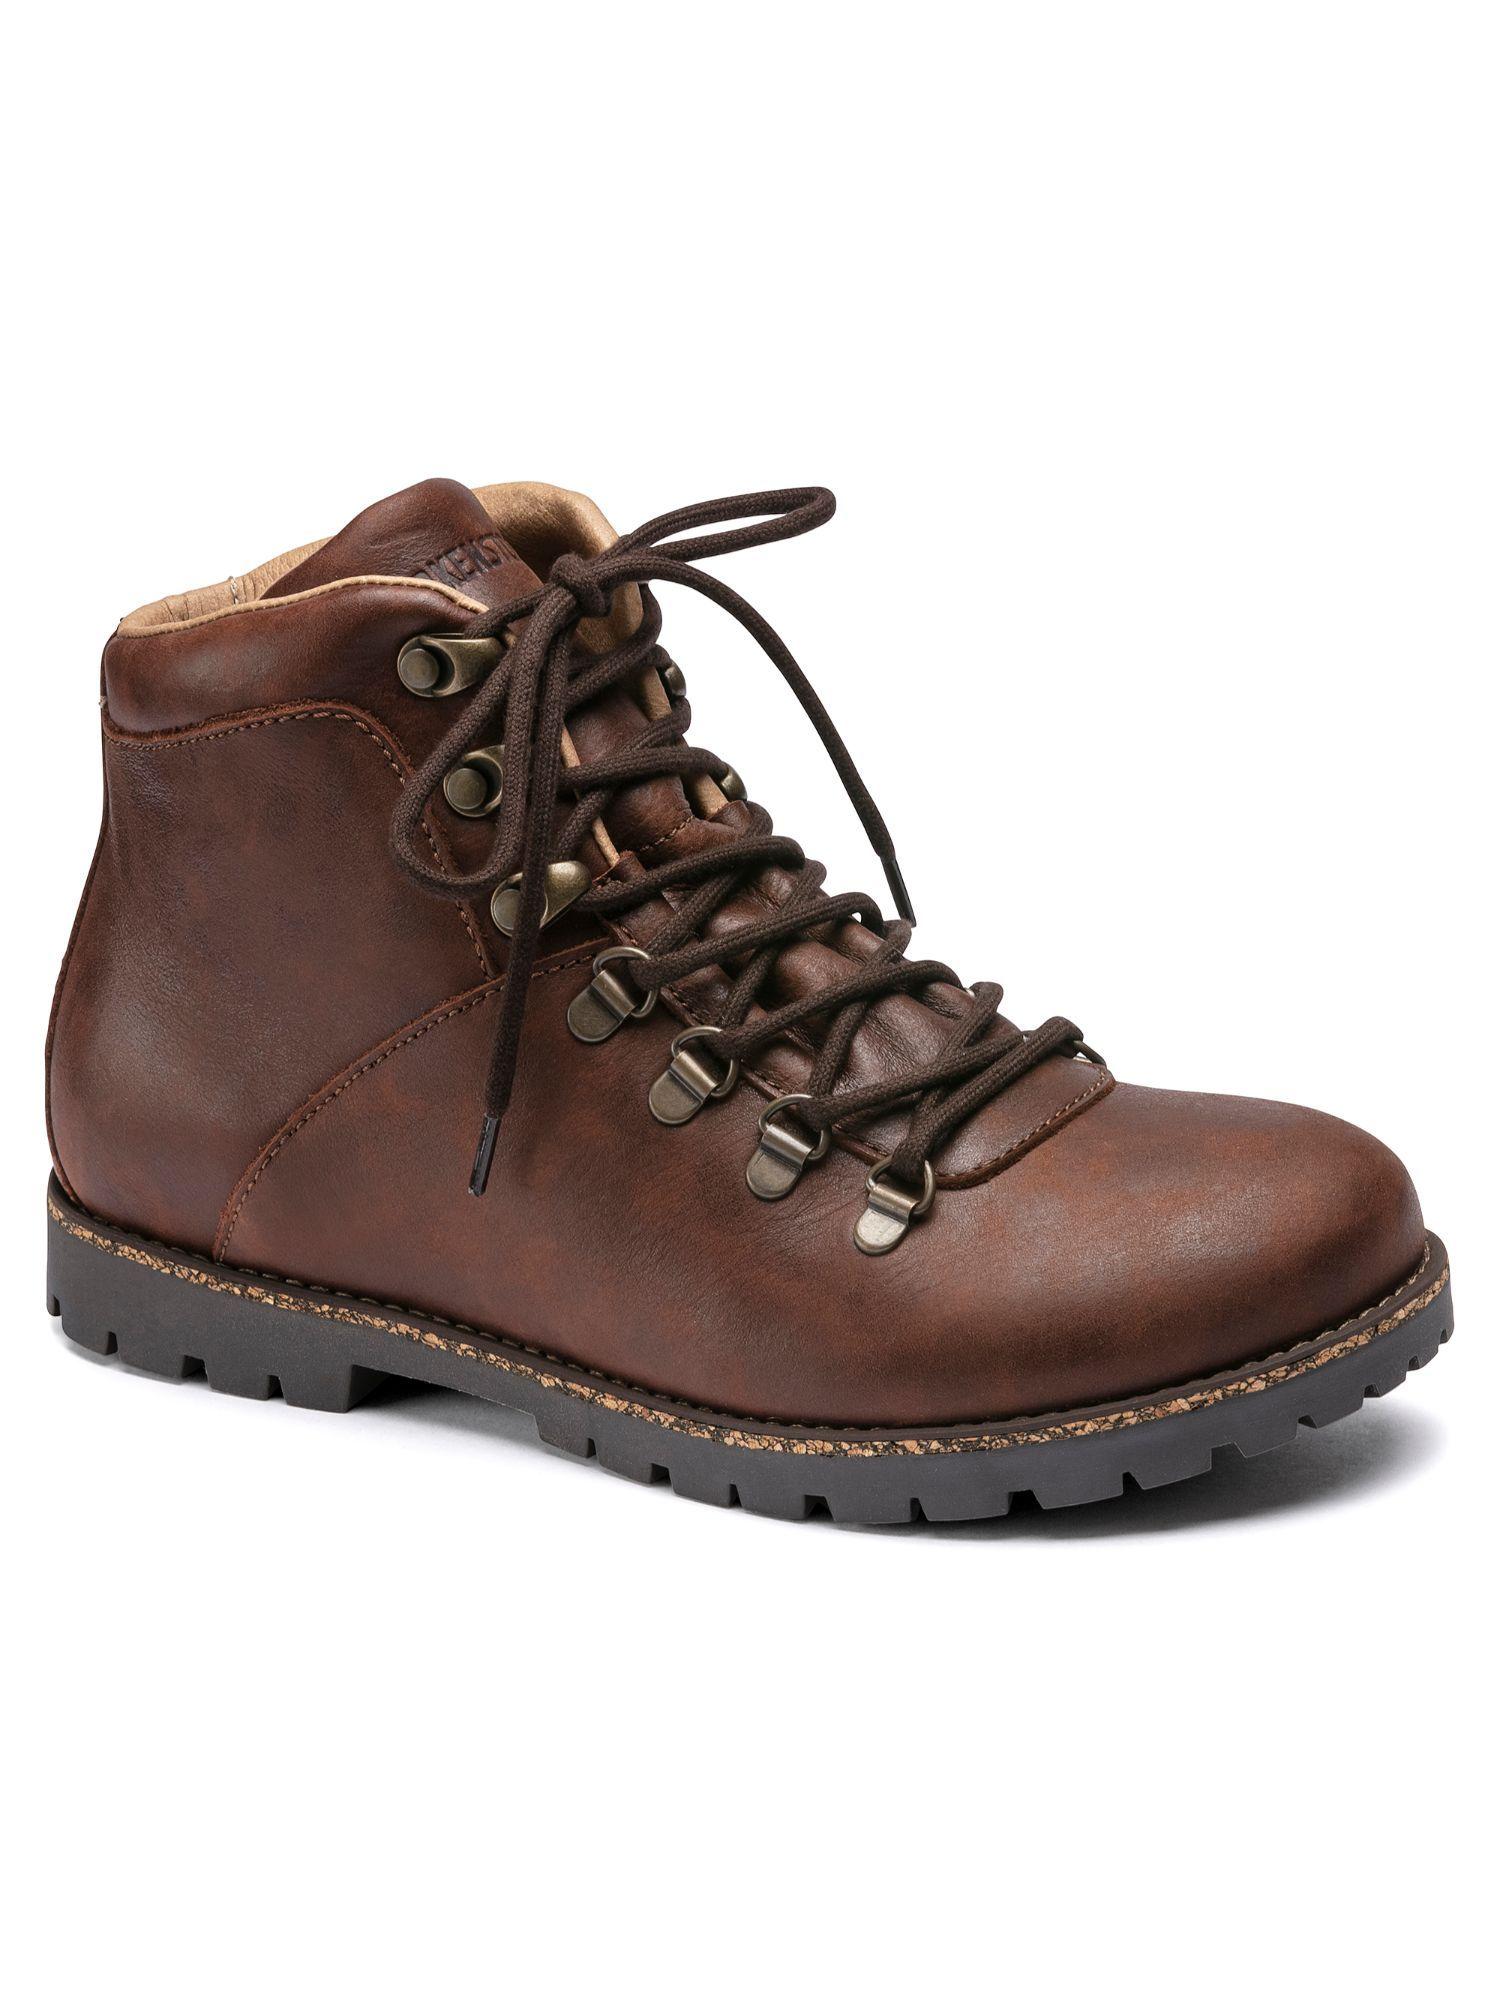 jackson nubuck leather brown flat boots